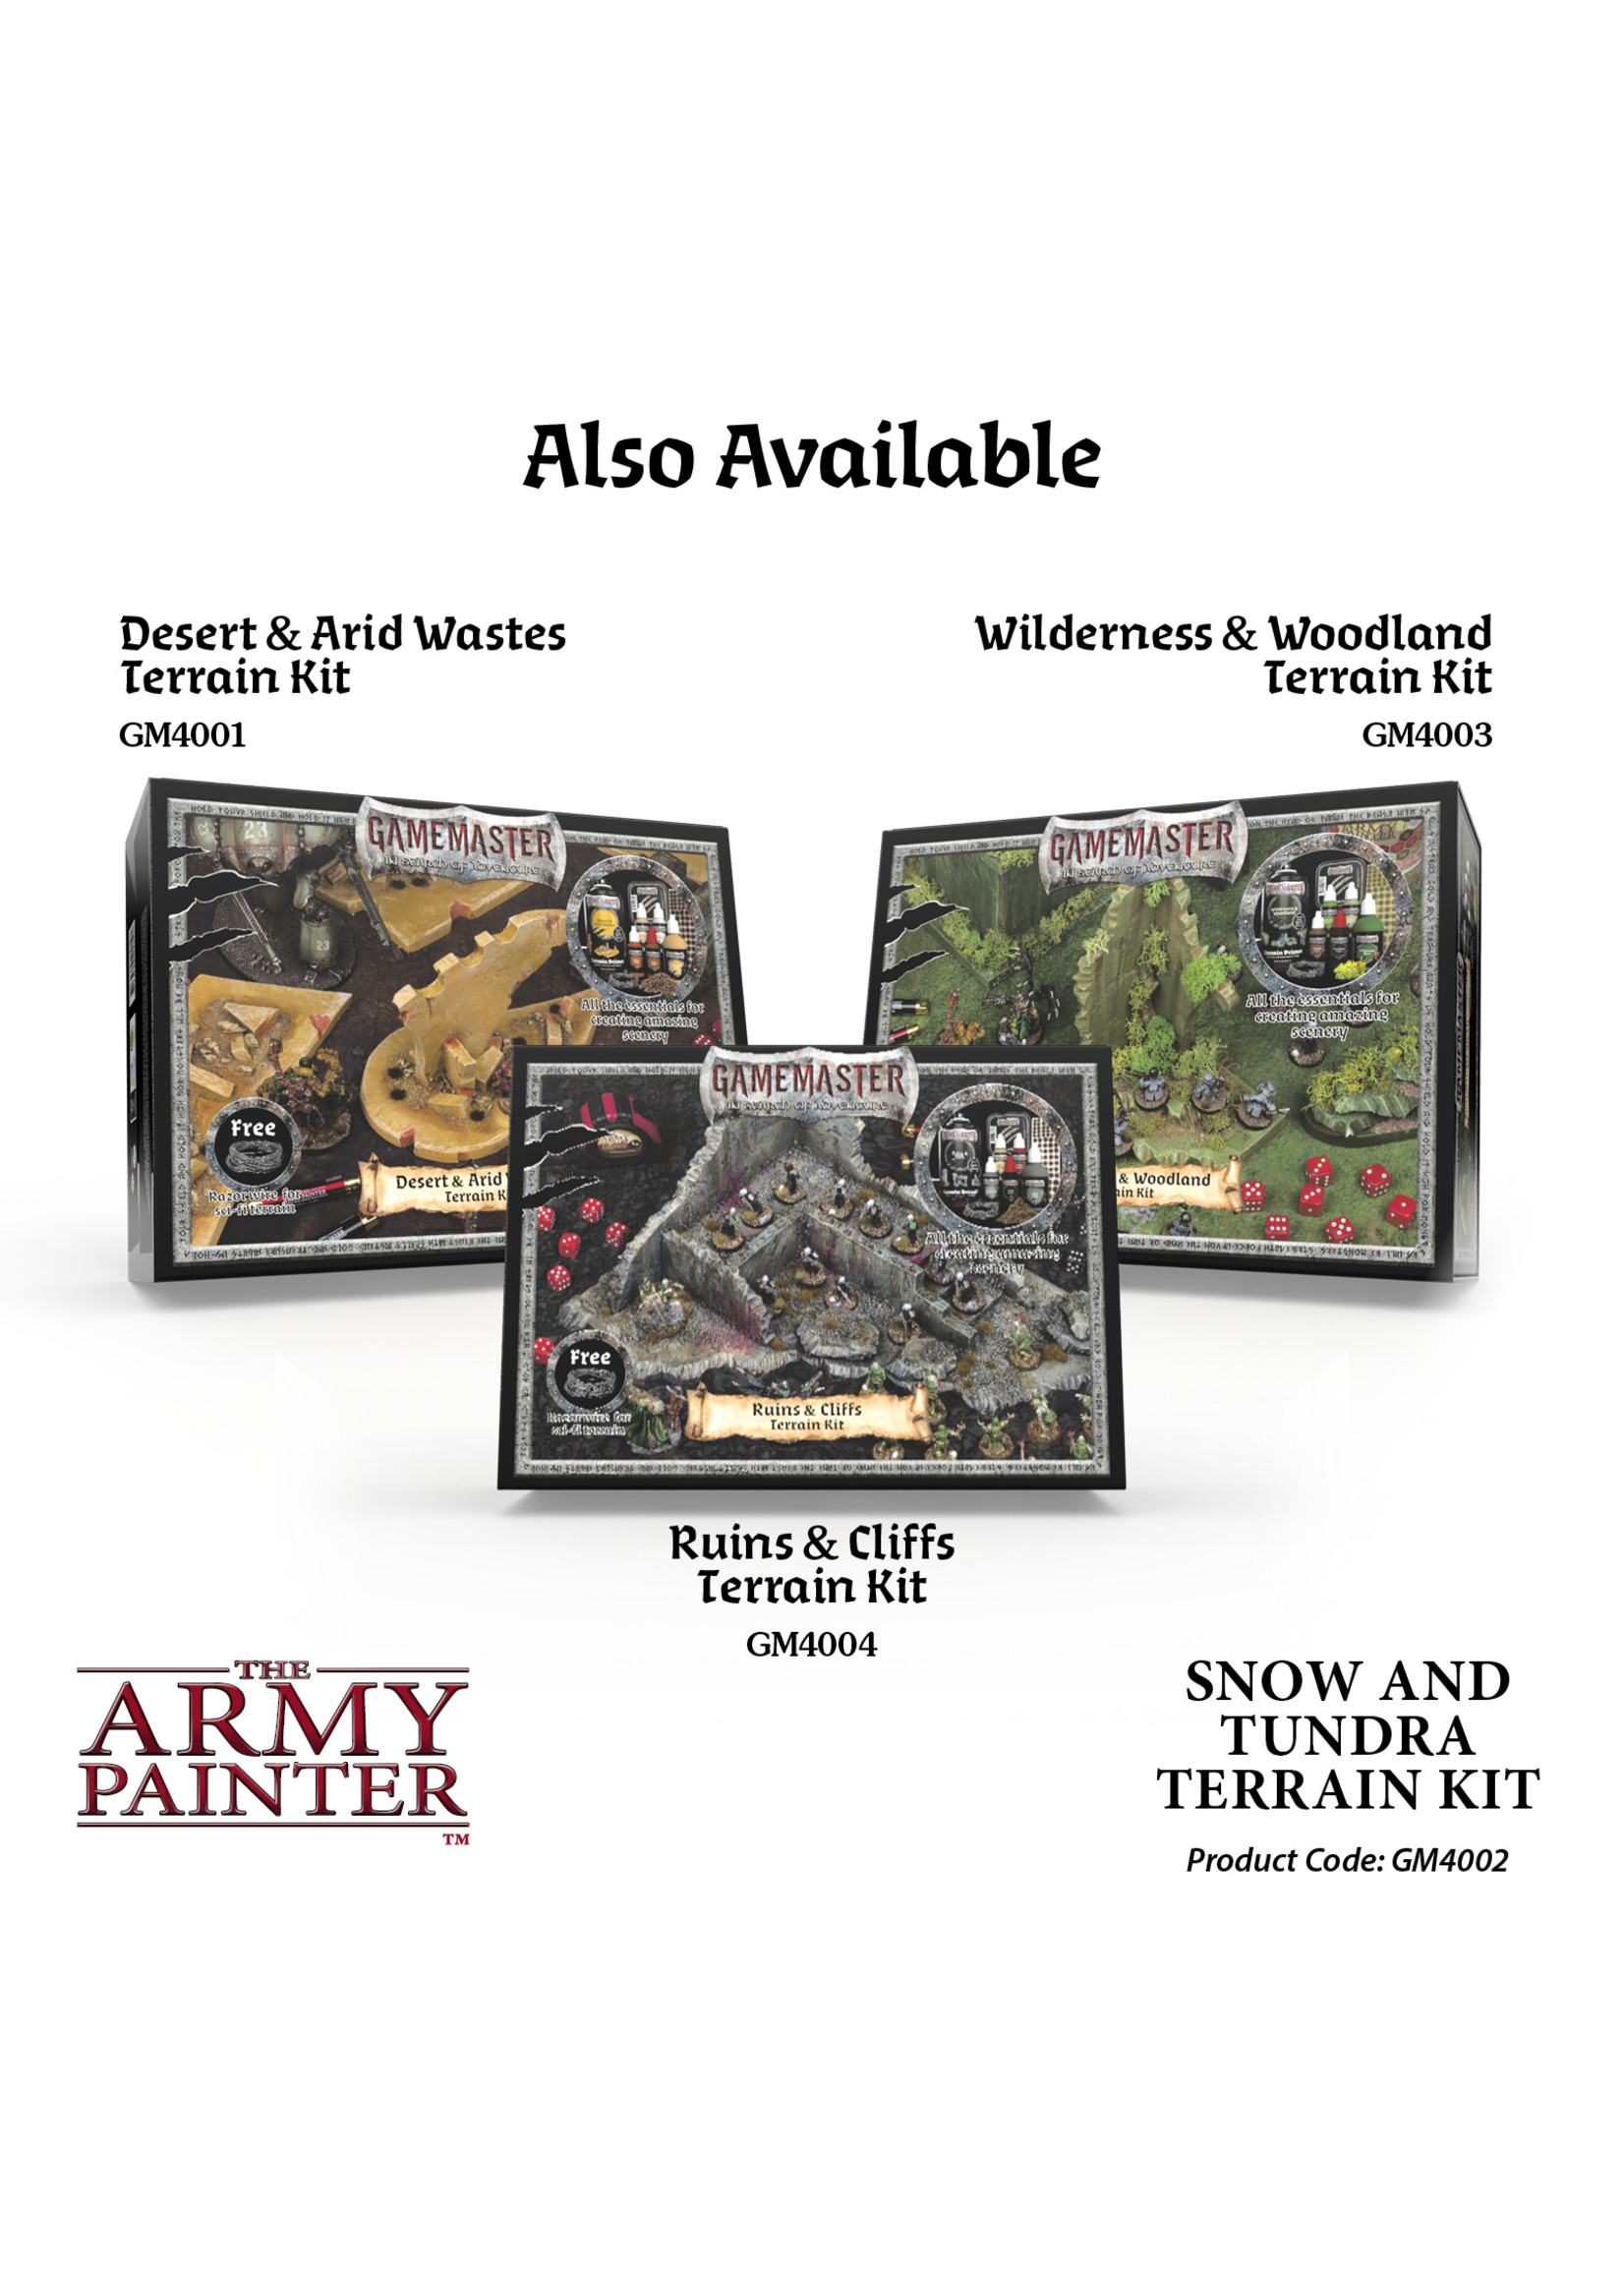 The Army Painter Gamemaster: Snow & Tundra Terrain Kit